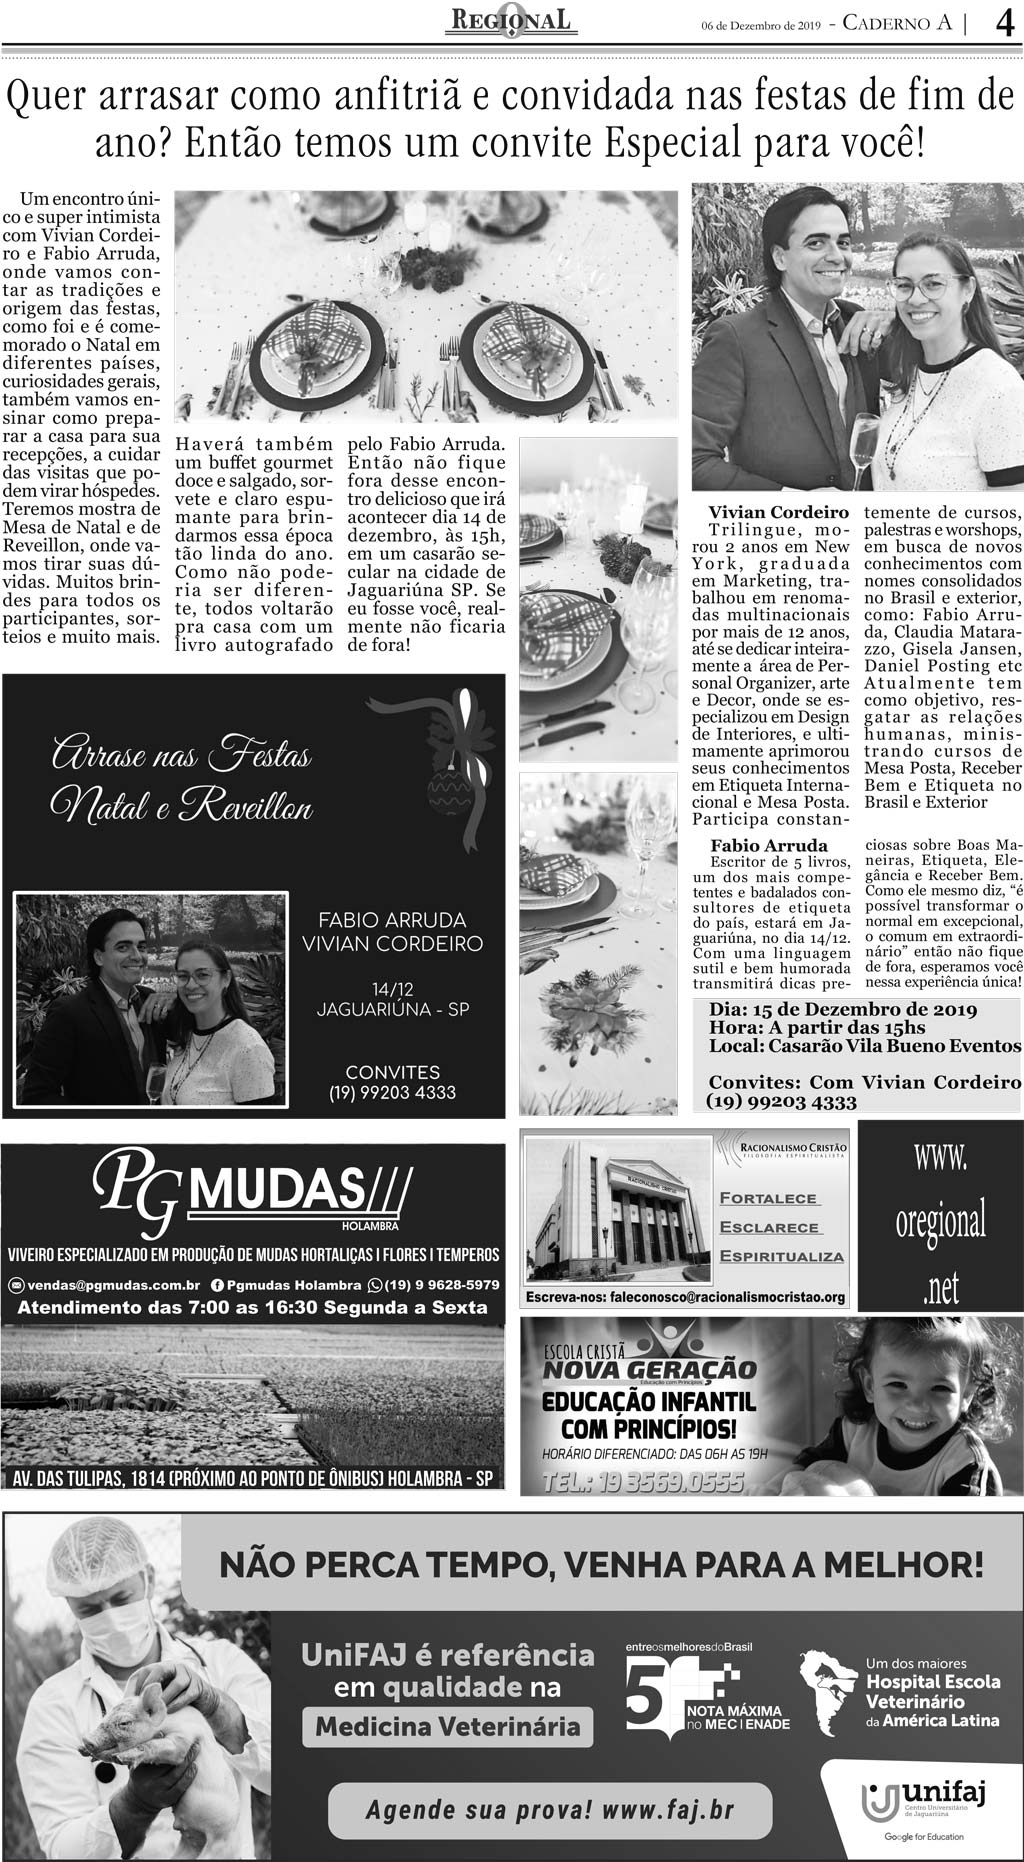 fabio-arruda-regional-2019-12-06-pagina-2